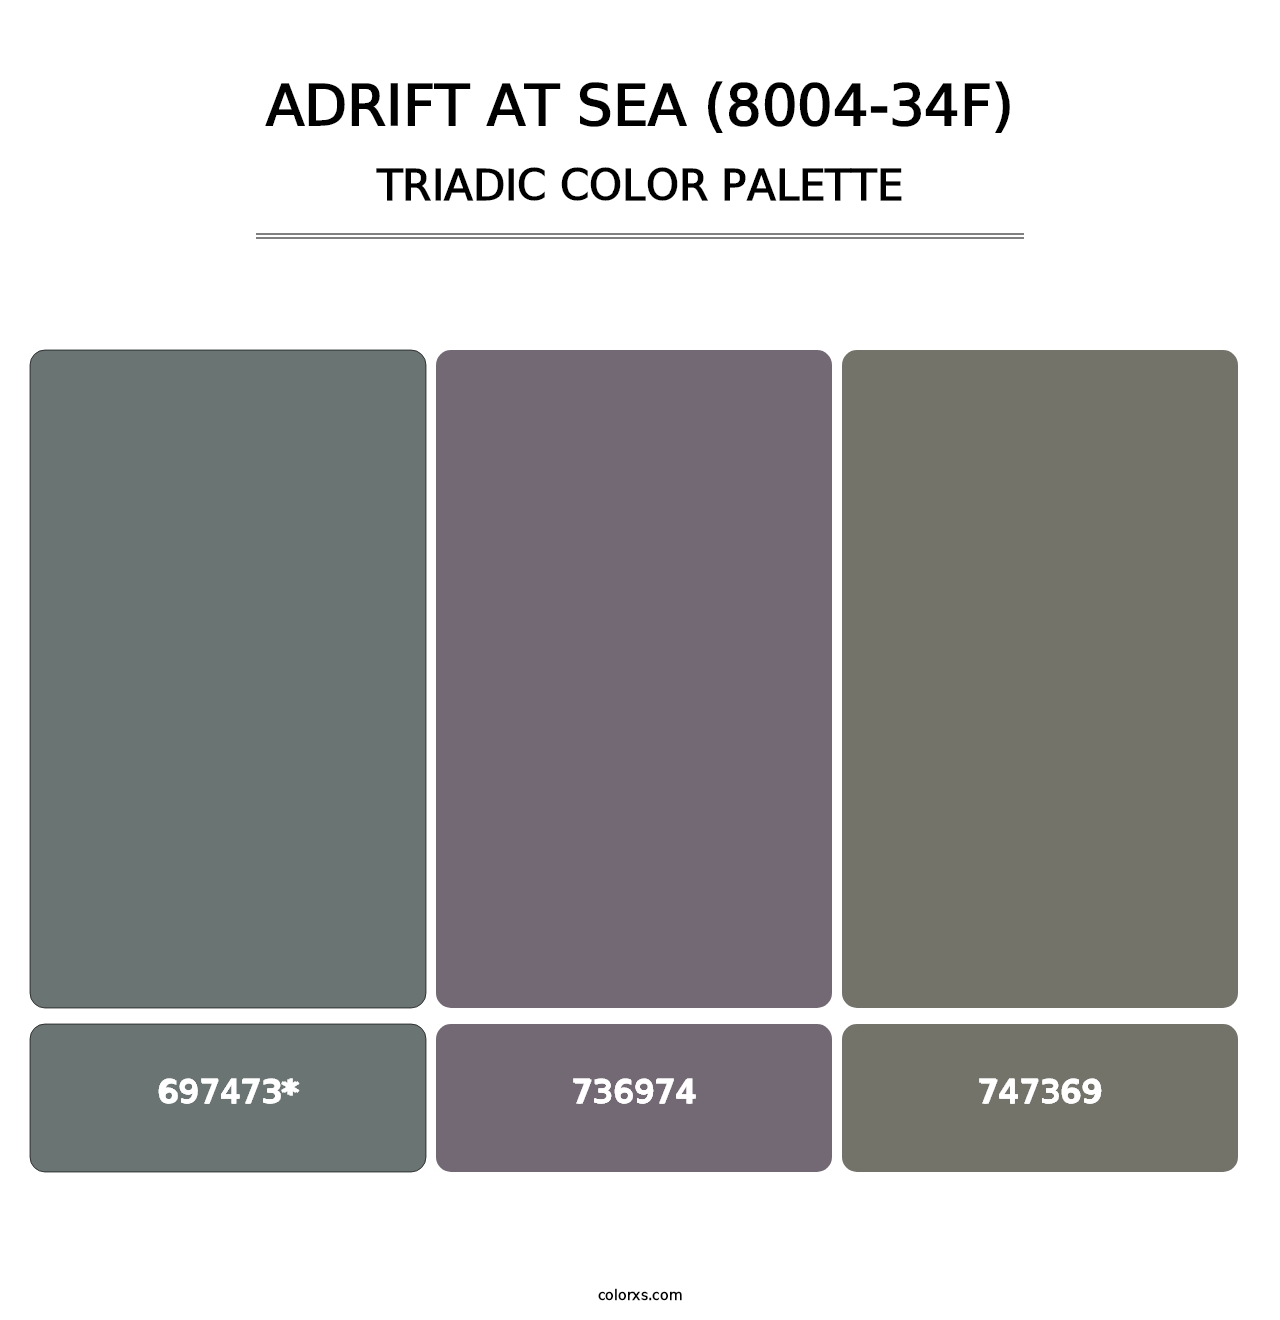 Adrift at Sea (8004-34F) - Triadic Color Palette